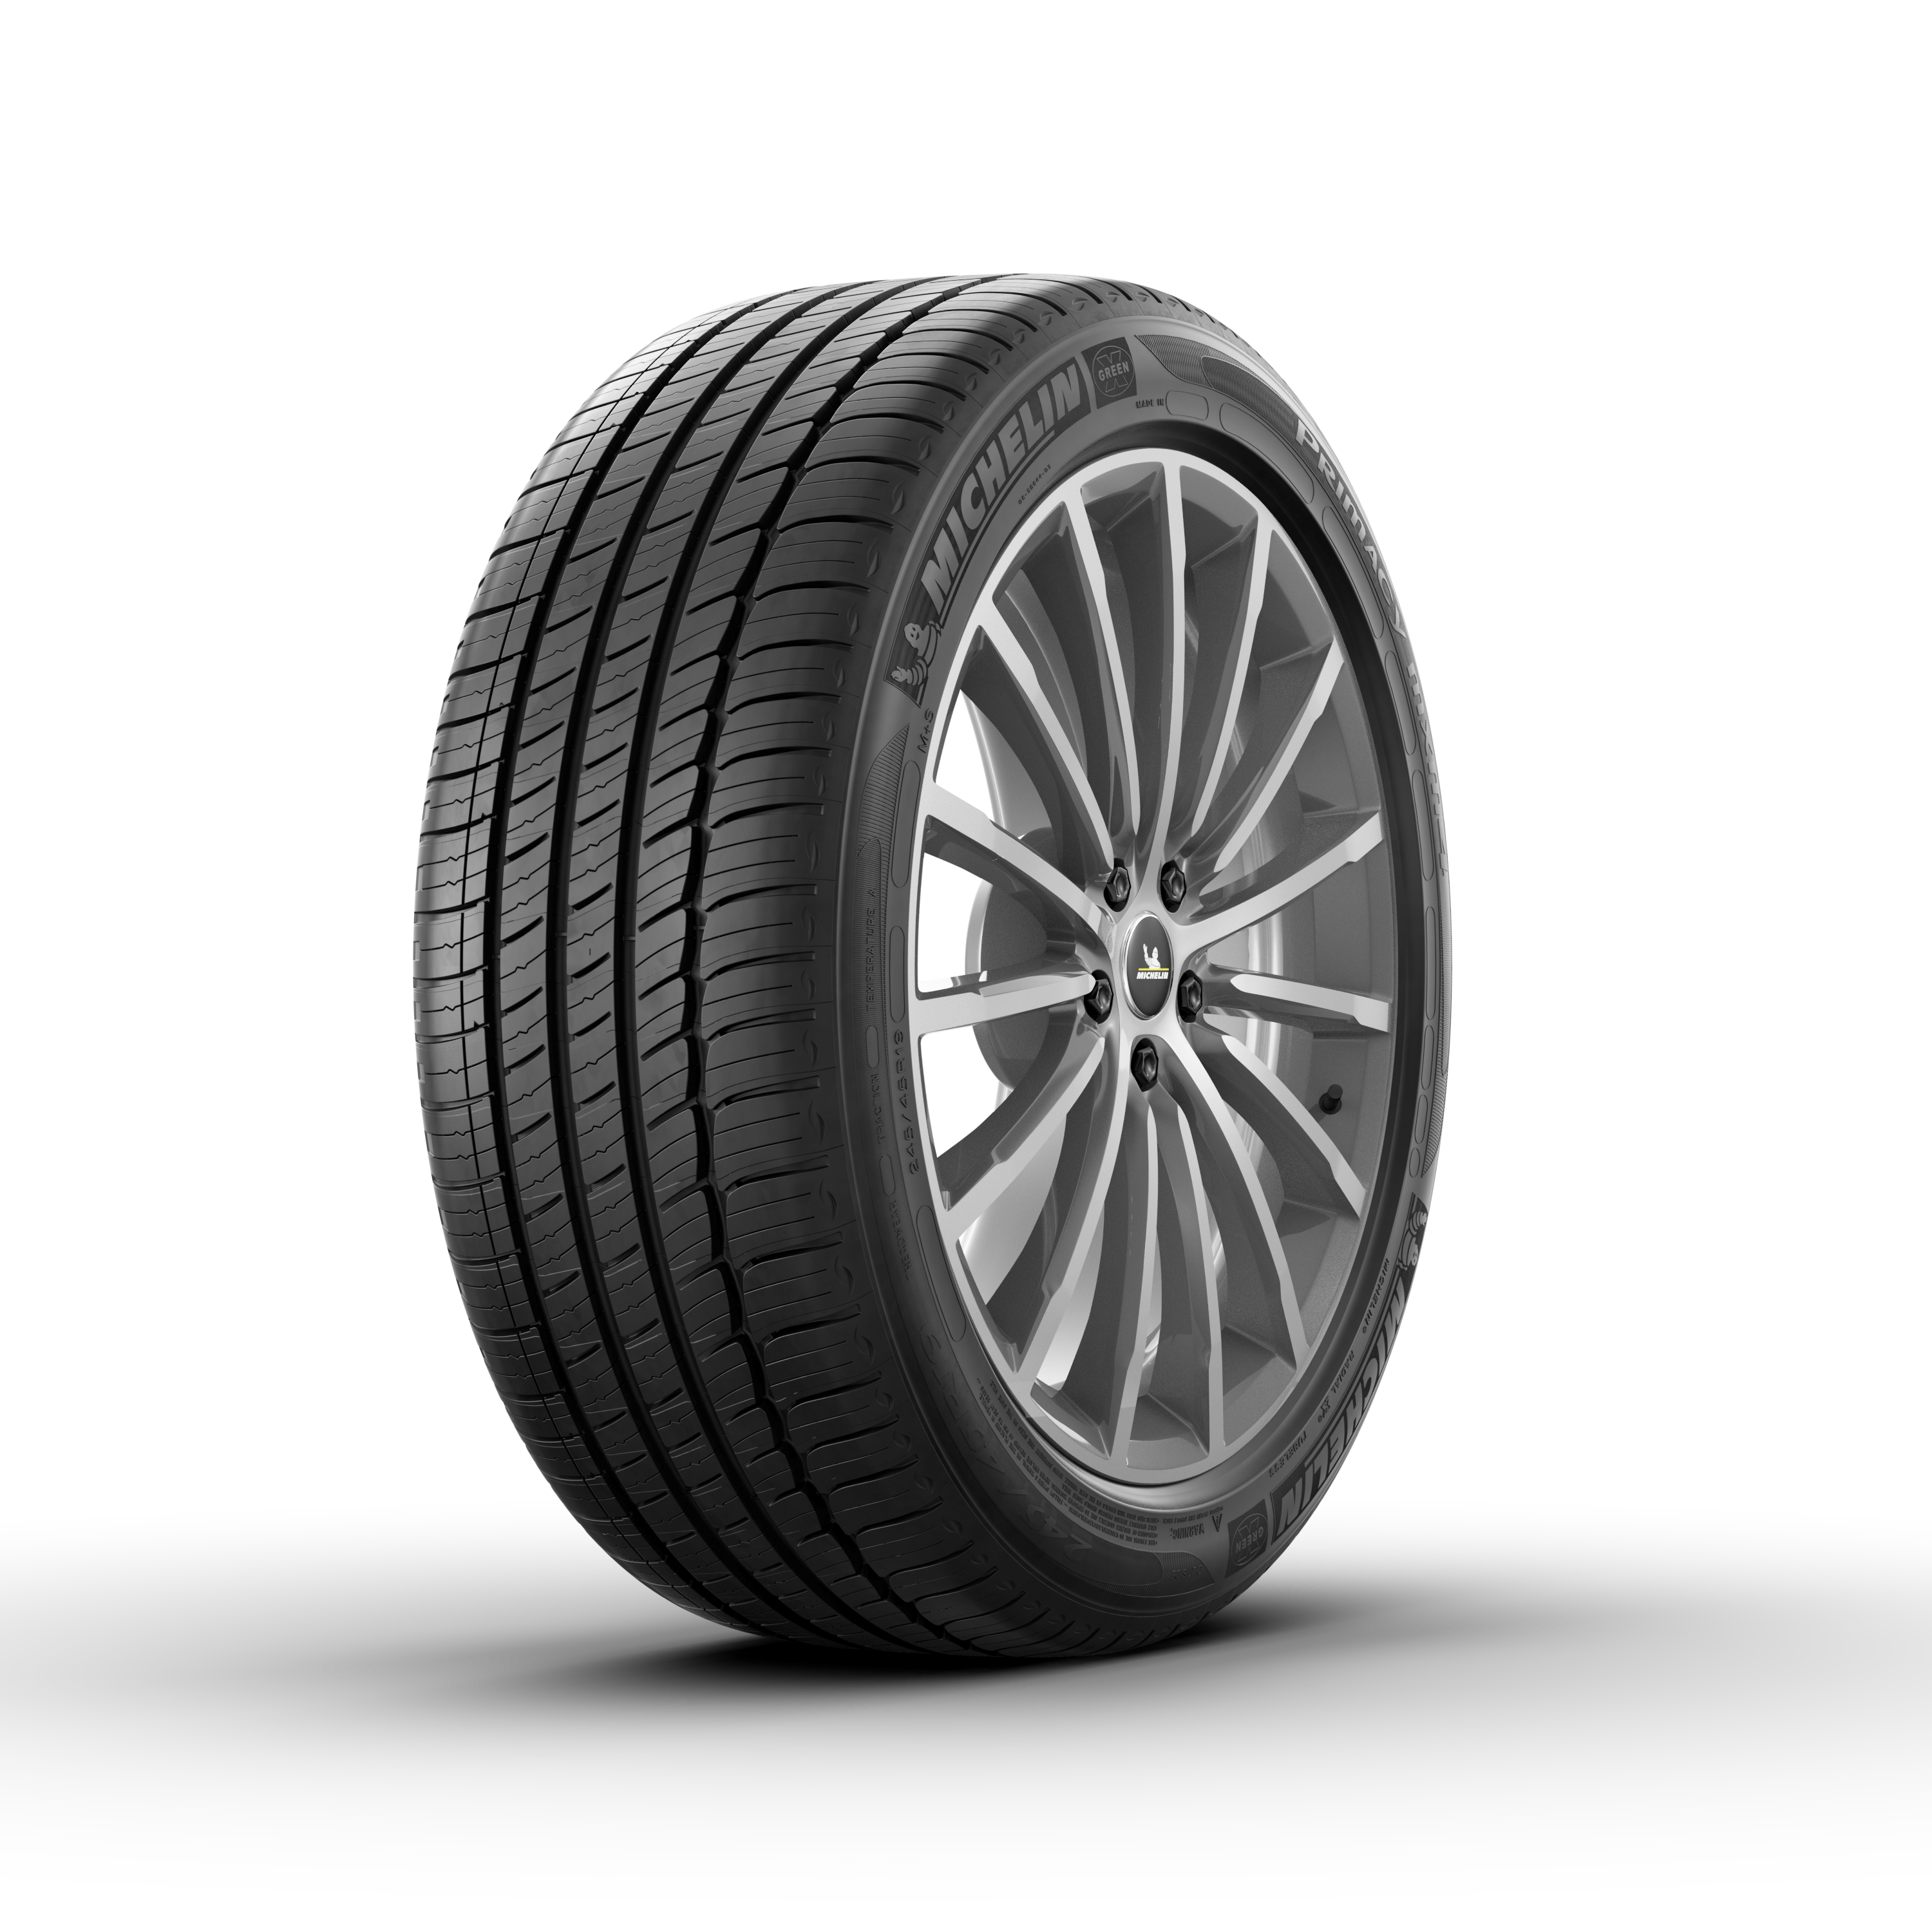 Michelin Primacy MXM4 Touring Radial Tire 235/45R17 94W 